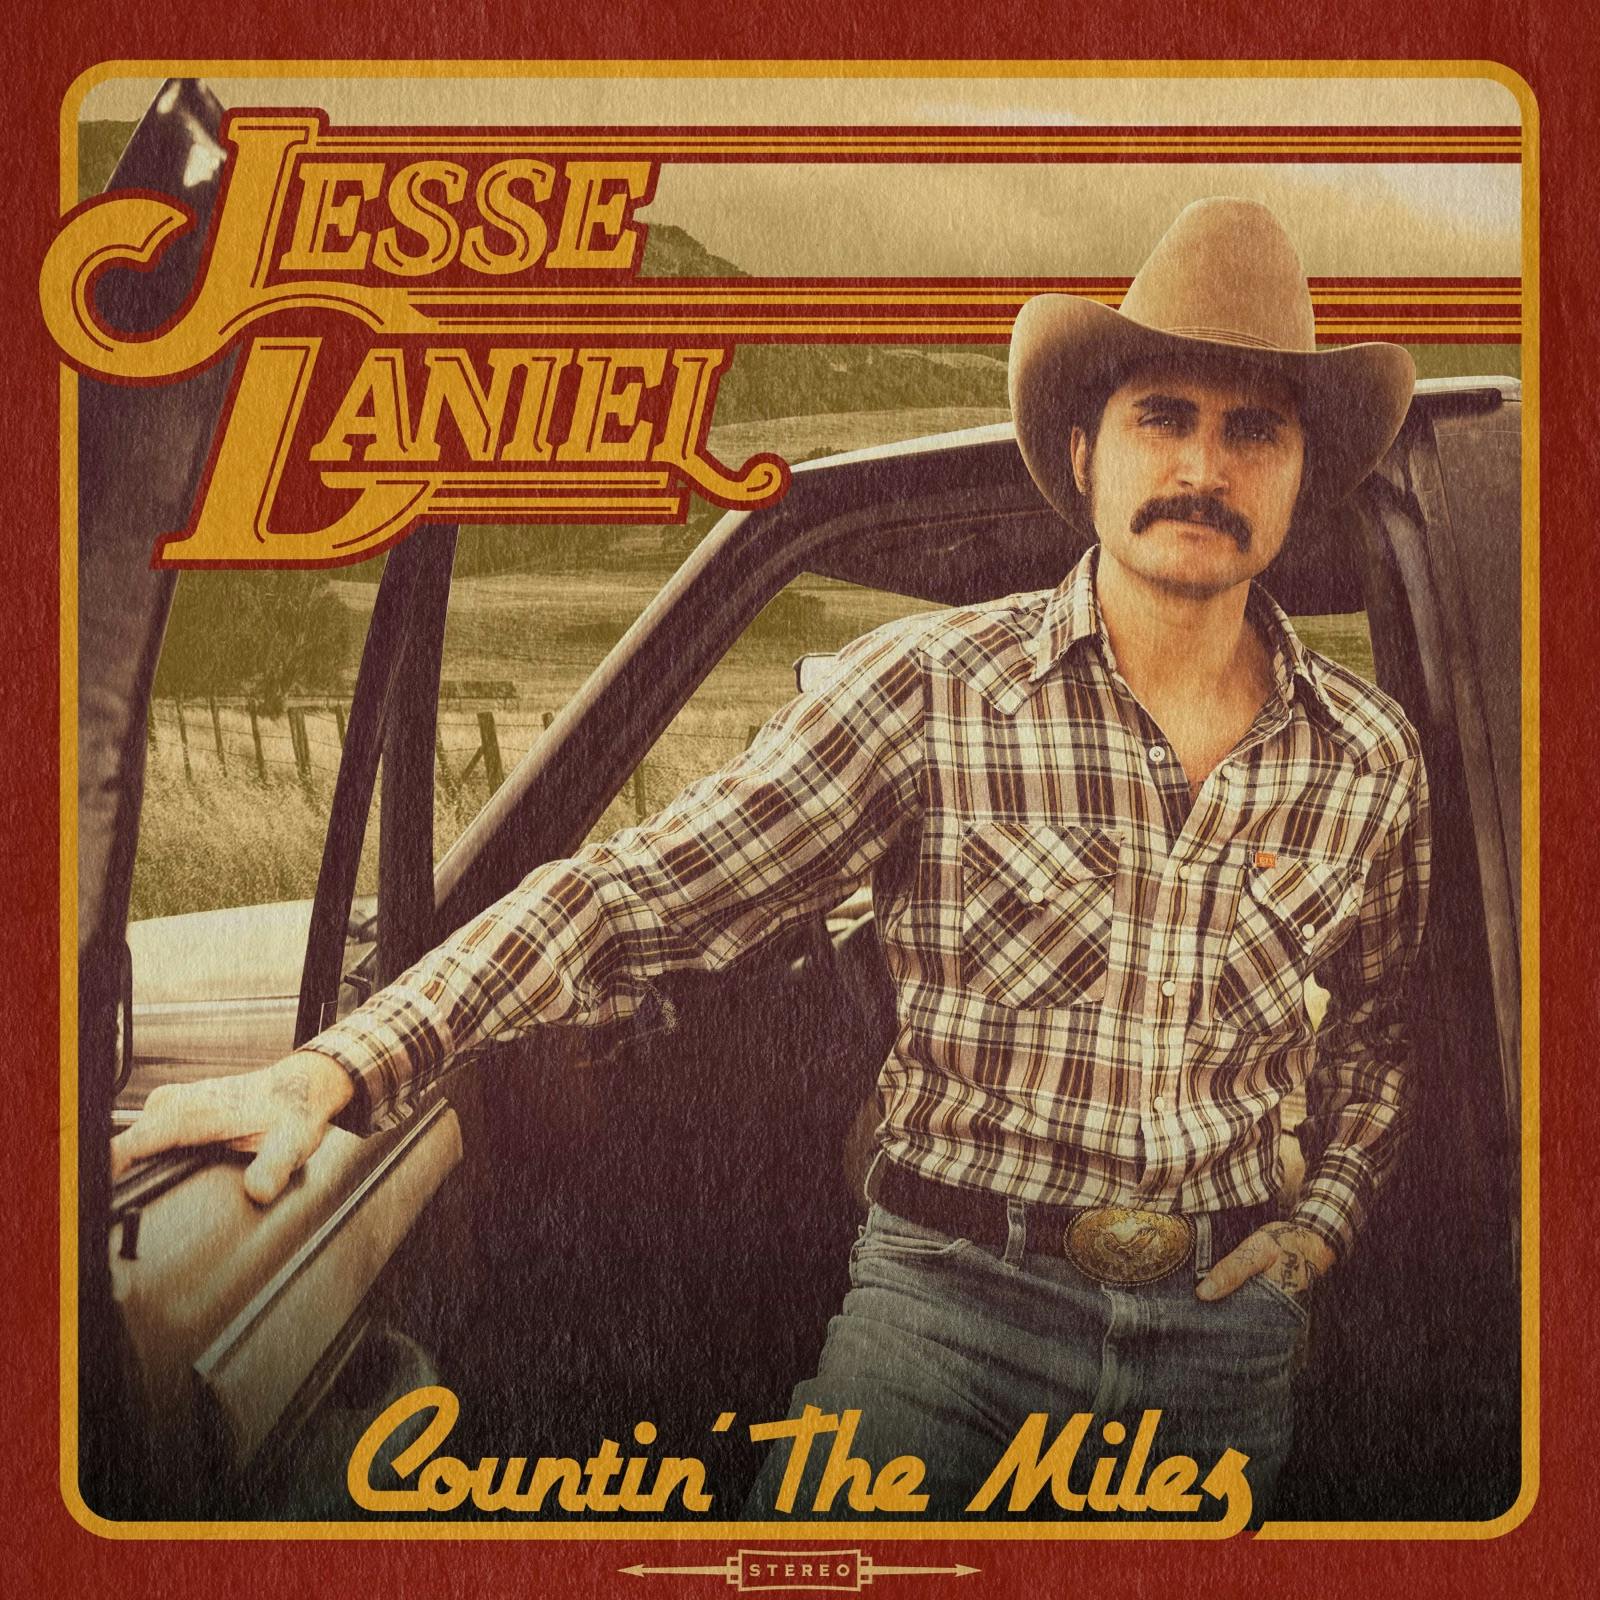 Jesse Daniel album cover of Countin' The Miles